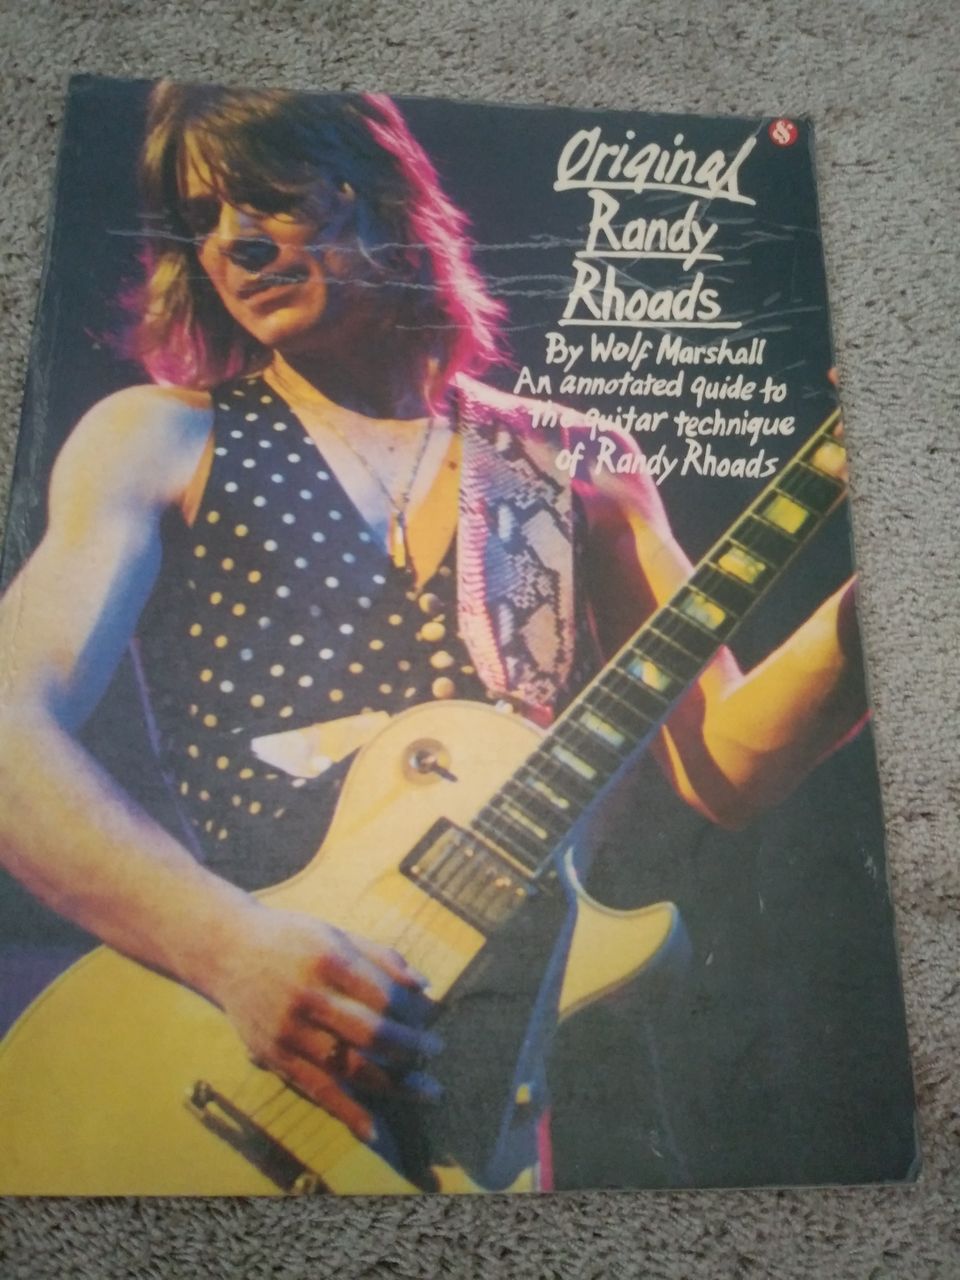 Original Randy Rhoads by Wolf Marshall, 1986.